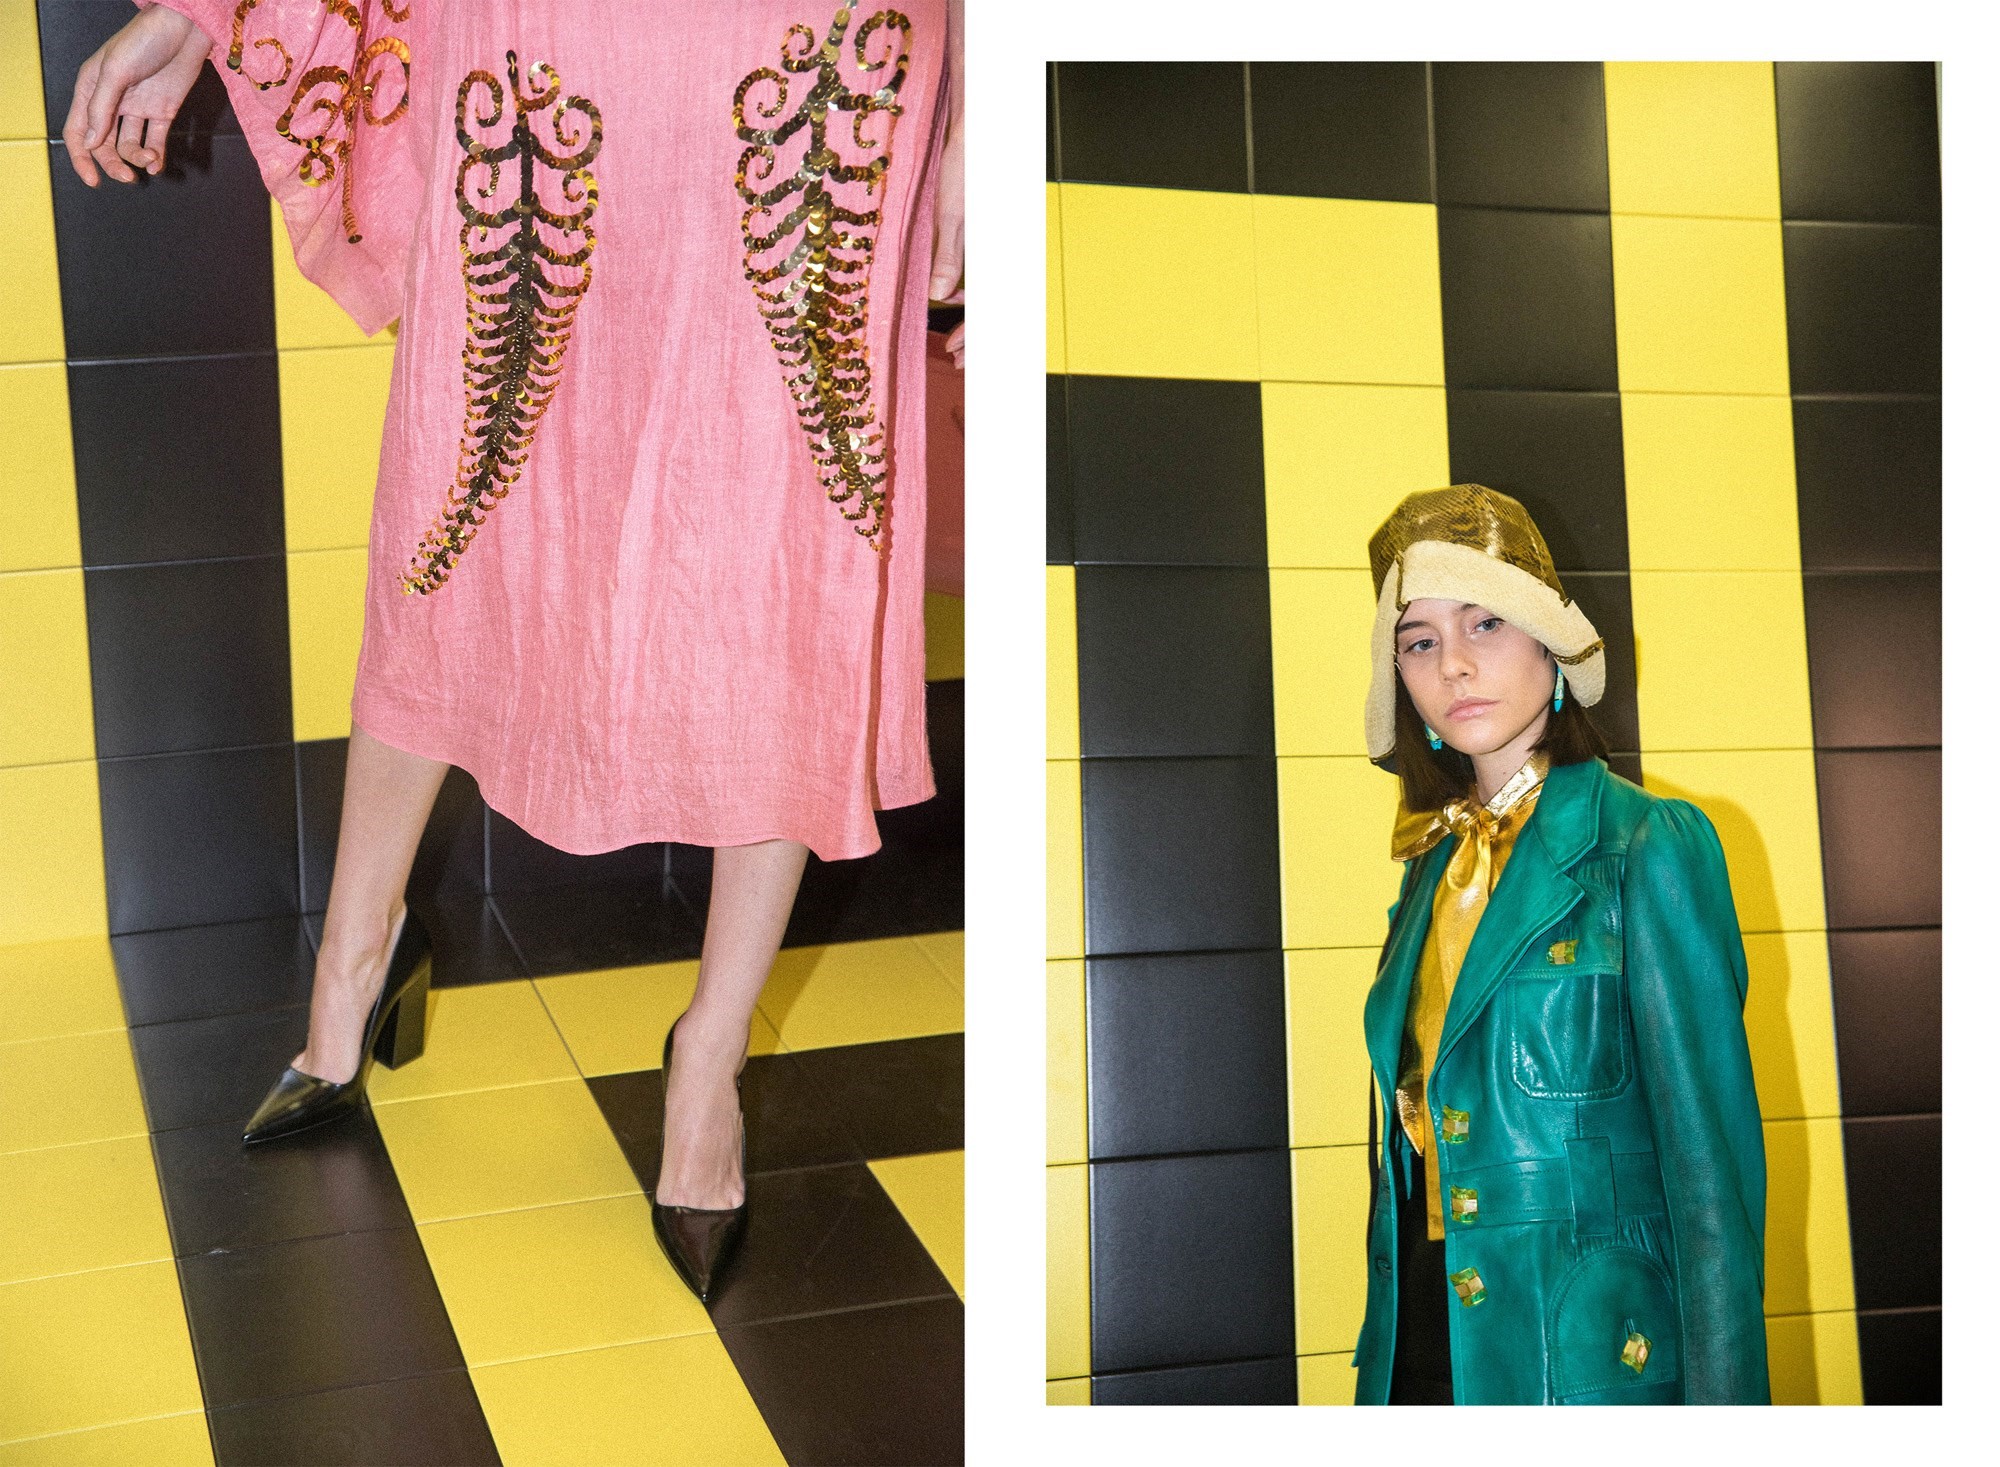 How Miuccia Prada Reinvented Fashion - The New York Times